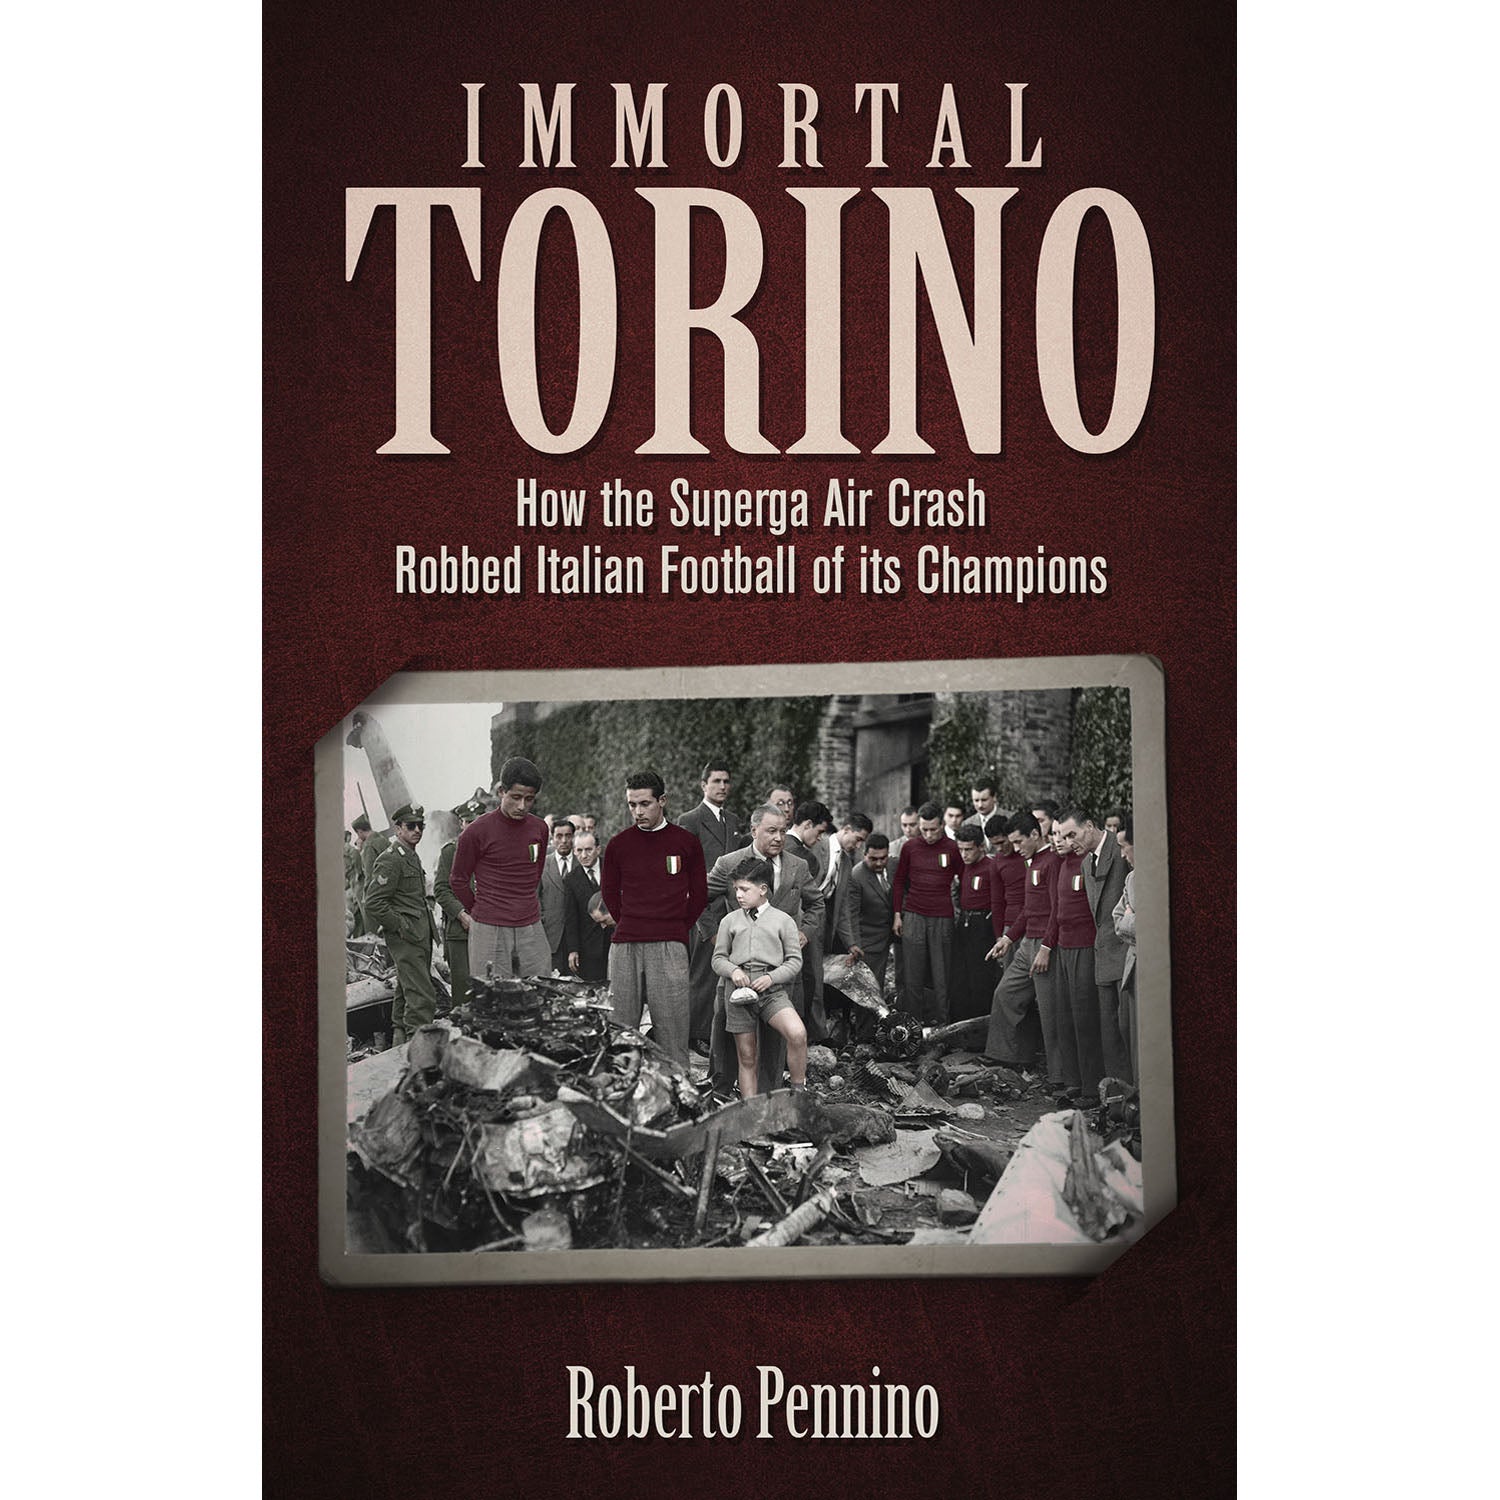 Immortal Torino – How the Superga Air Crash Robbed Italian Football of its Champions